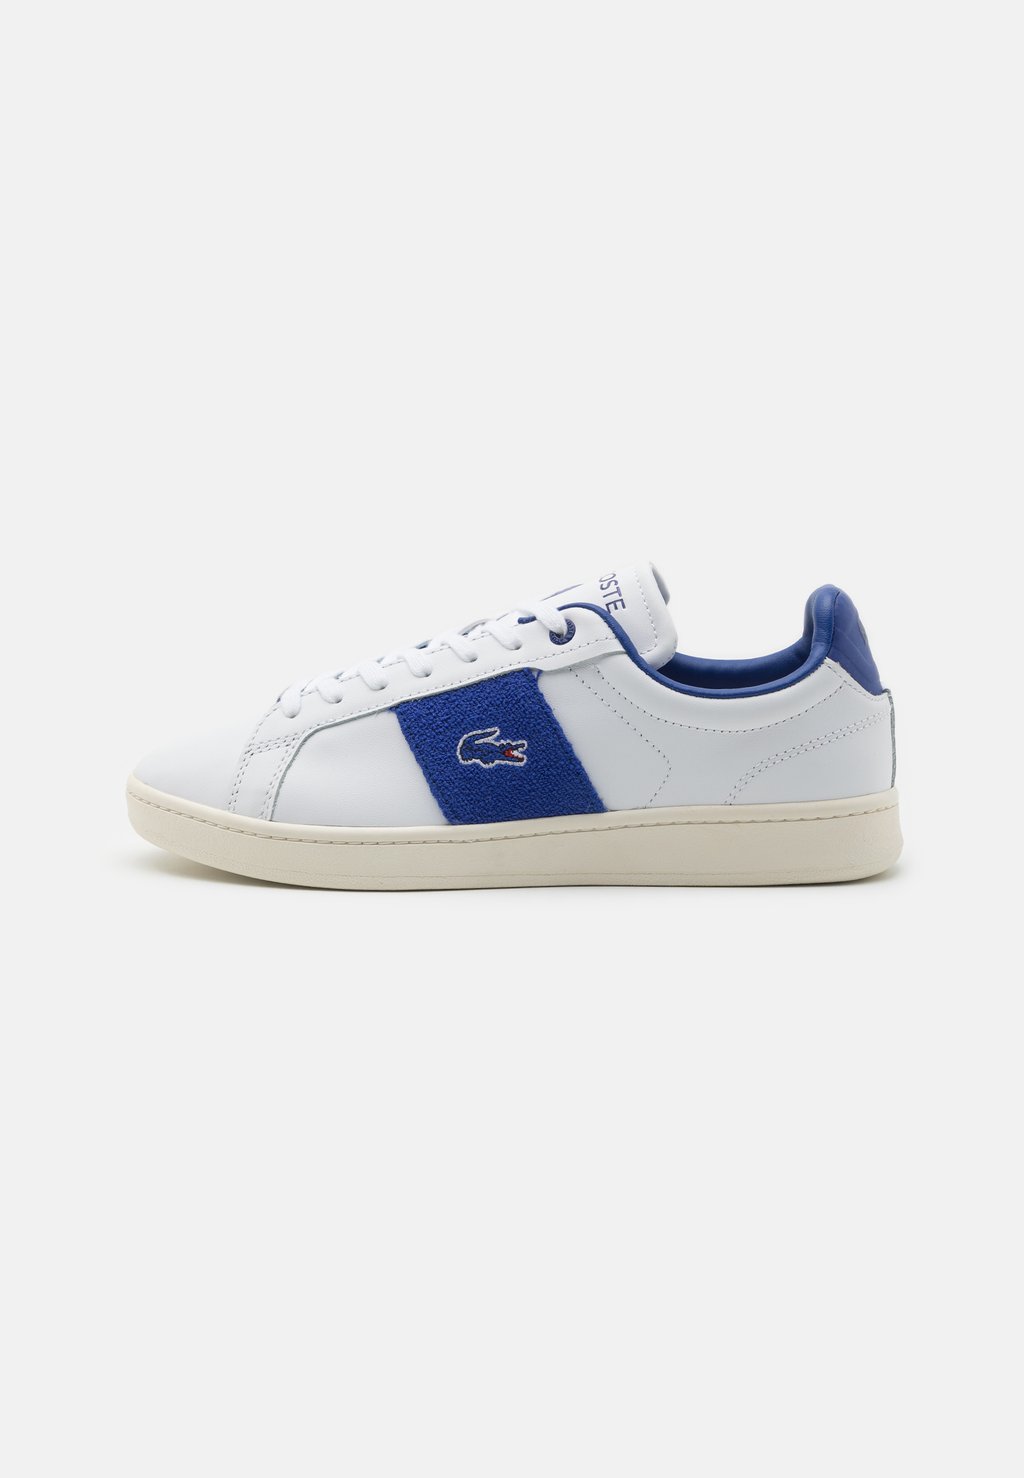 Низкие кроссовки Carnaby Pro Lacoste, цвет white/blue низкие кроссовки carnaby pro lacoste цвет off white